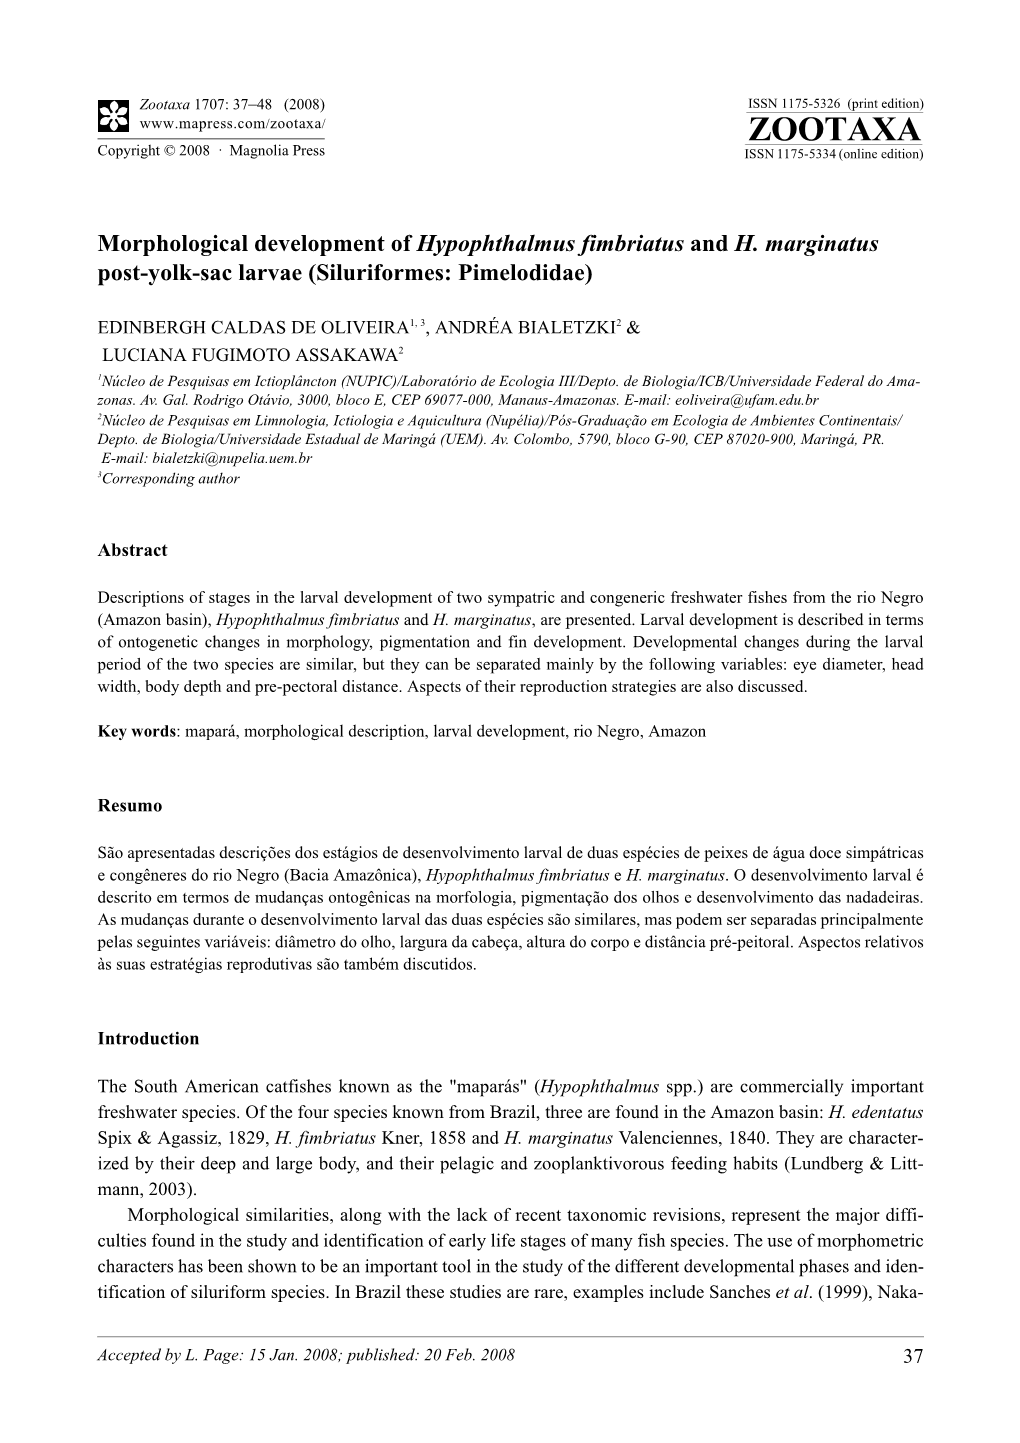 Zootaxa, Morphological Development of Hypophthalmus Fimbriatus and H